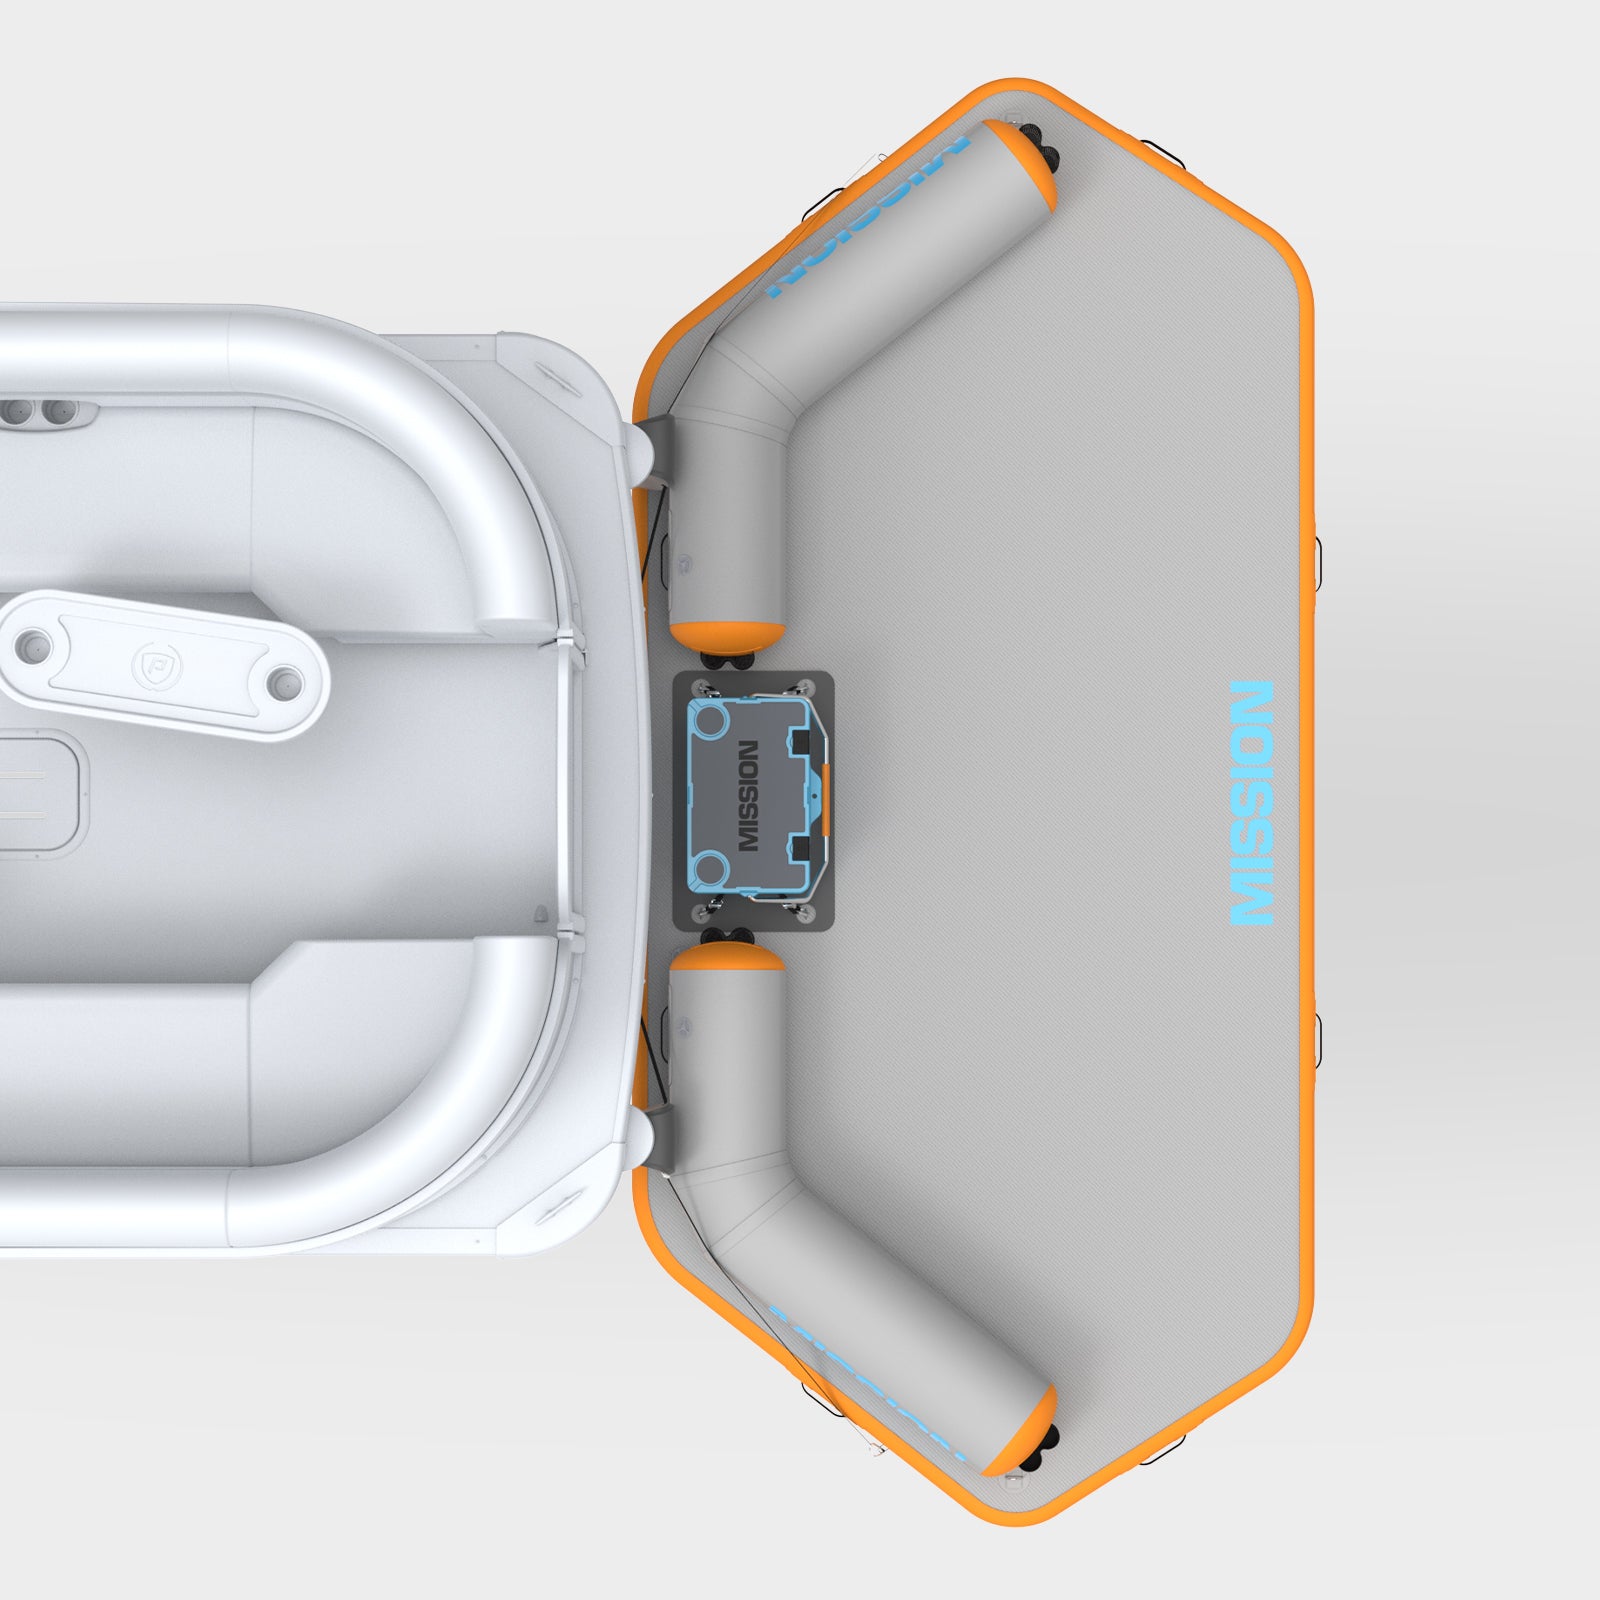 REEF DECK | Inflatable Swim Platform + Lounger